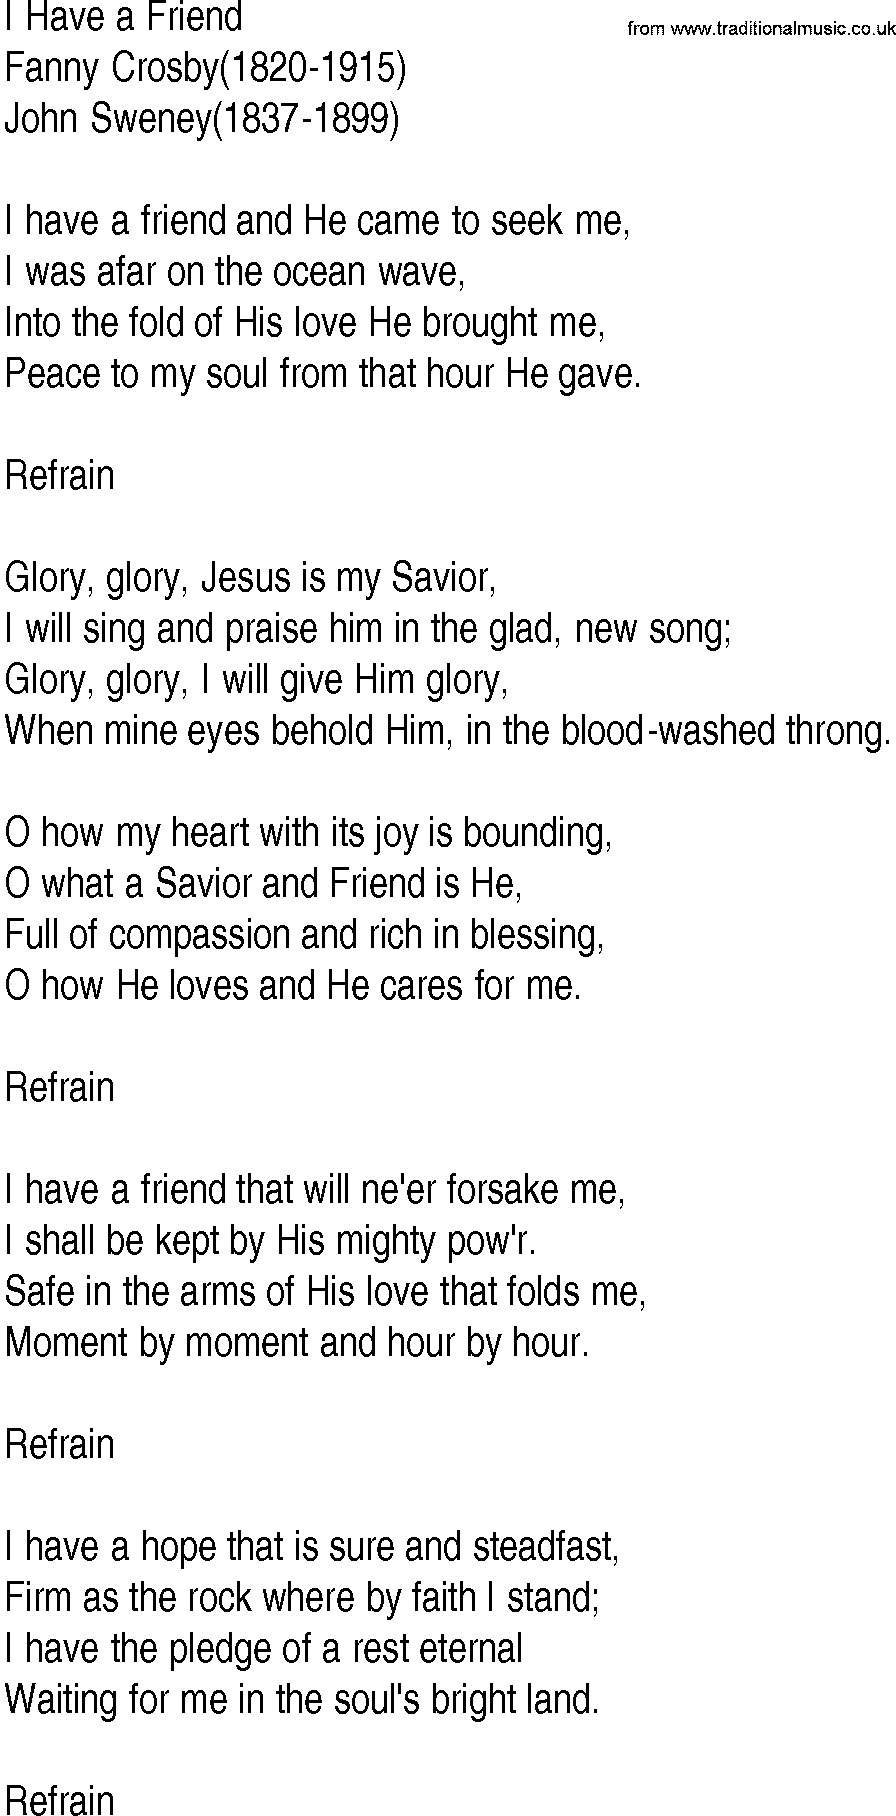 Hymn and Gospel Song: I Have a Friend by Fanny Crosby lyrics